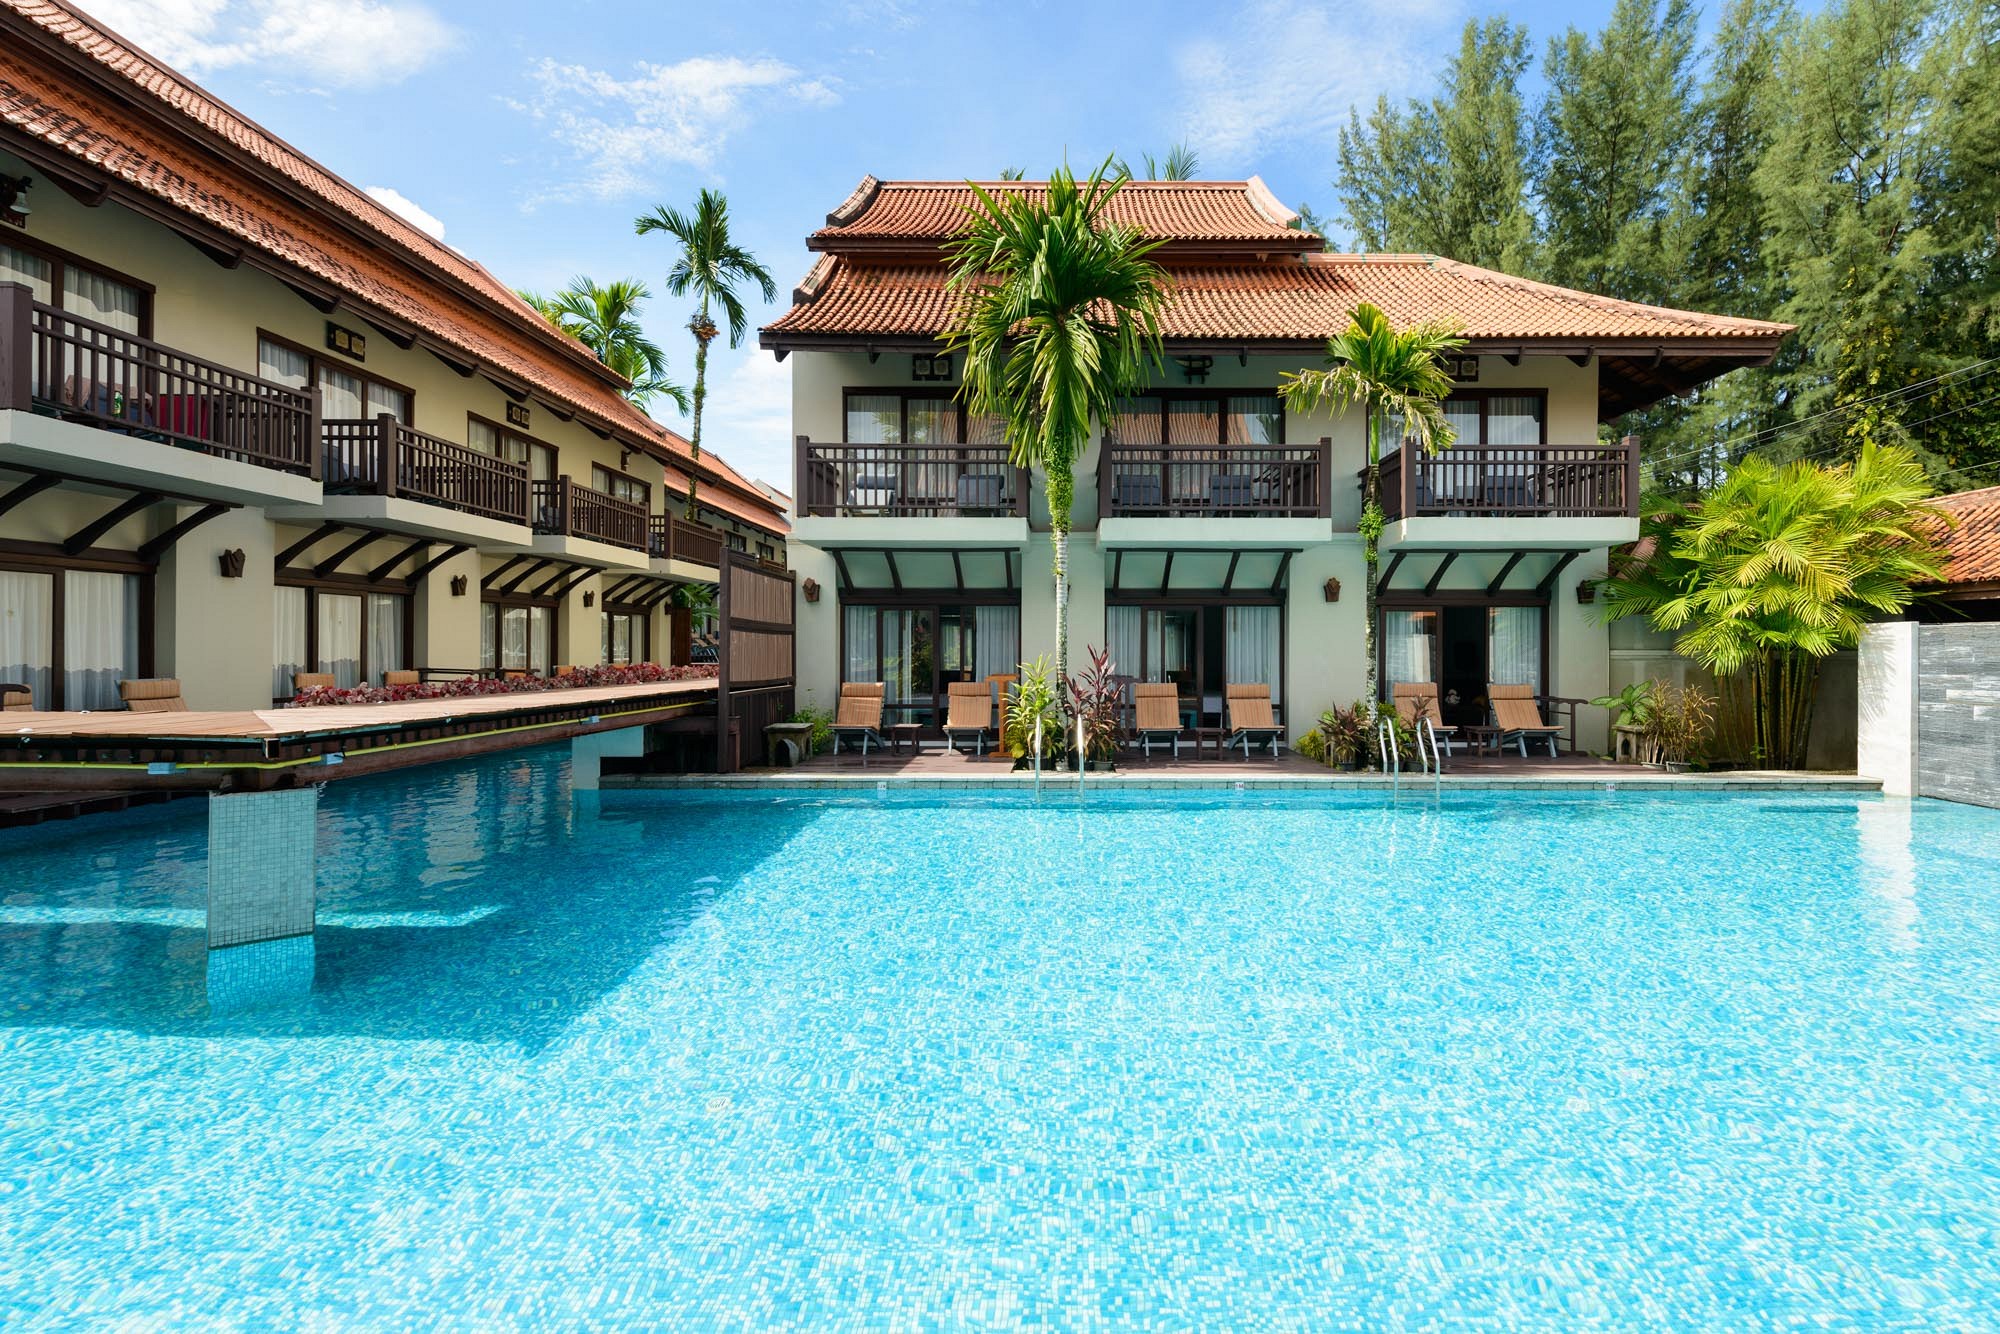 Pool & Hotel at Khao Lak resort, the first stop on Thai-Qatar Adventure.